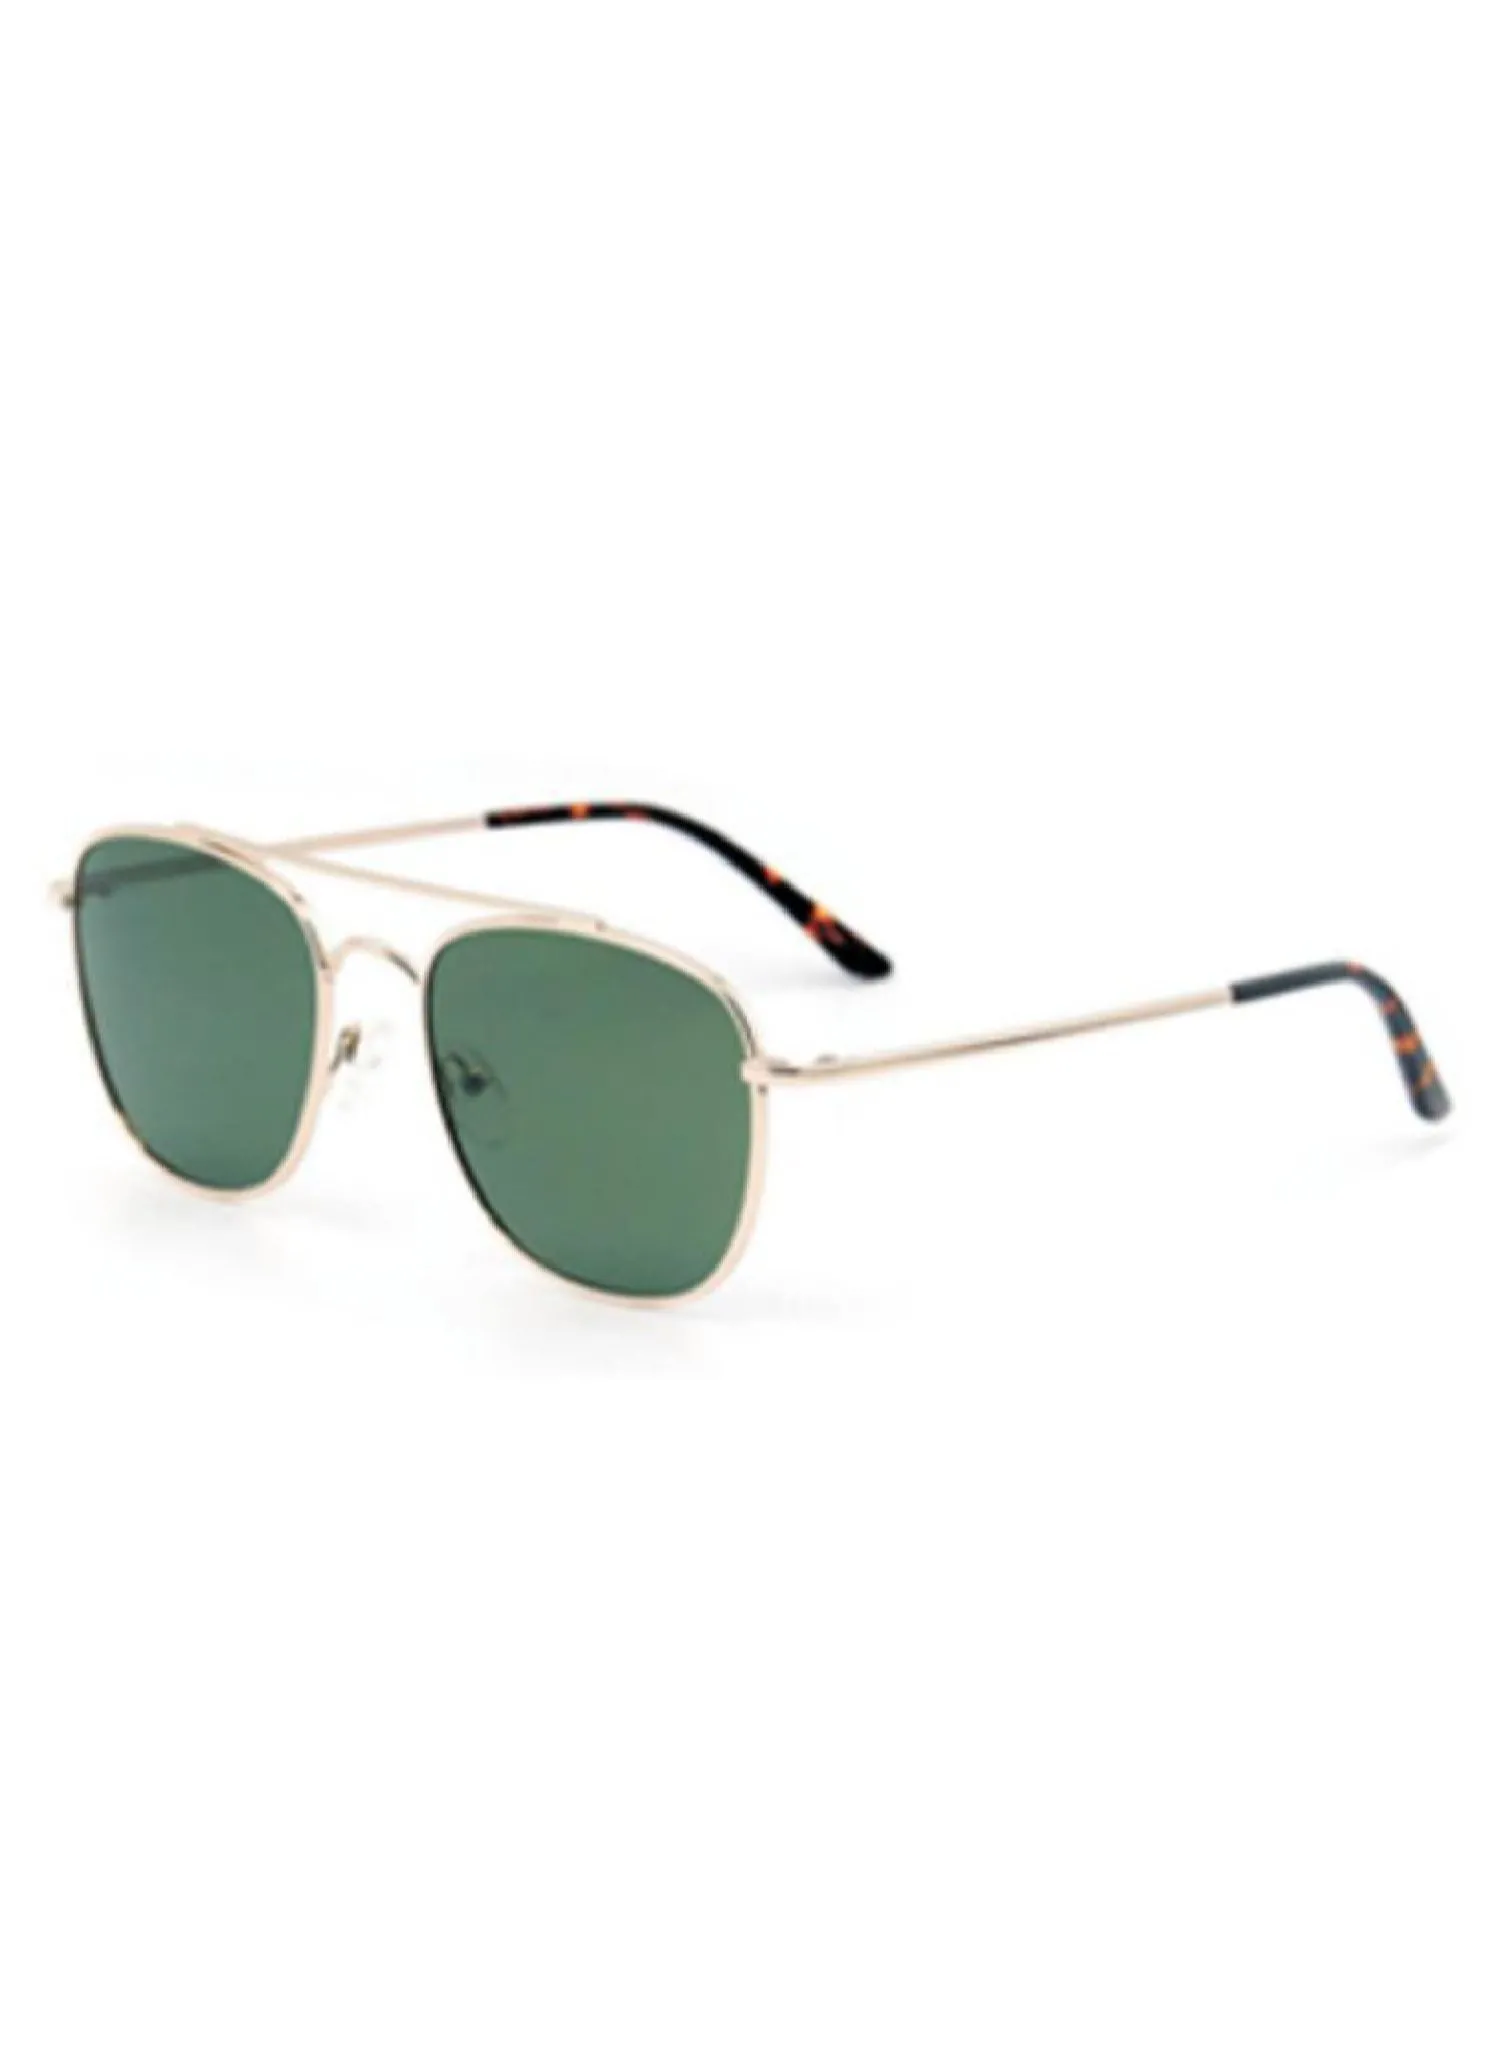 LAOONT Men's Sunglasses Polarized Lenses Square Frame-Stylish Design